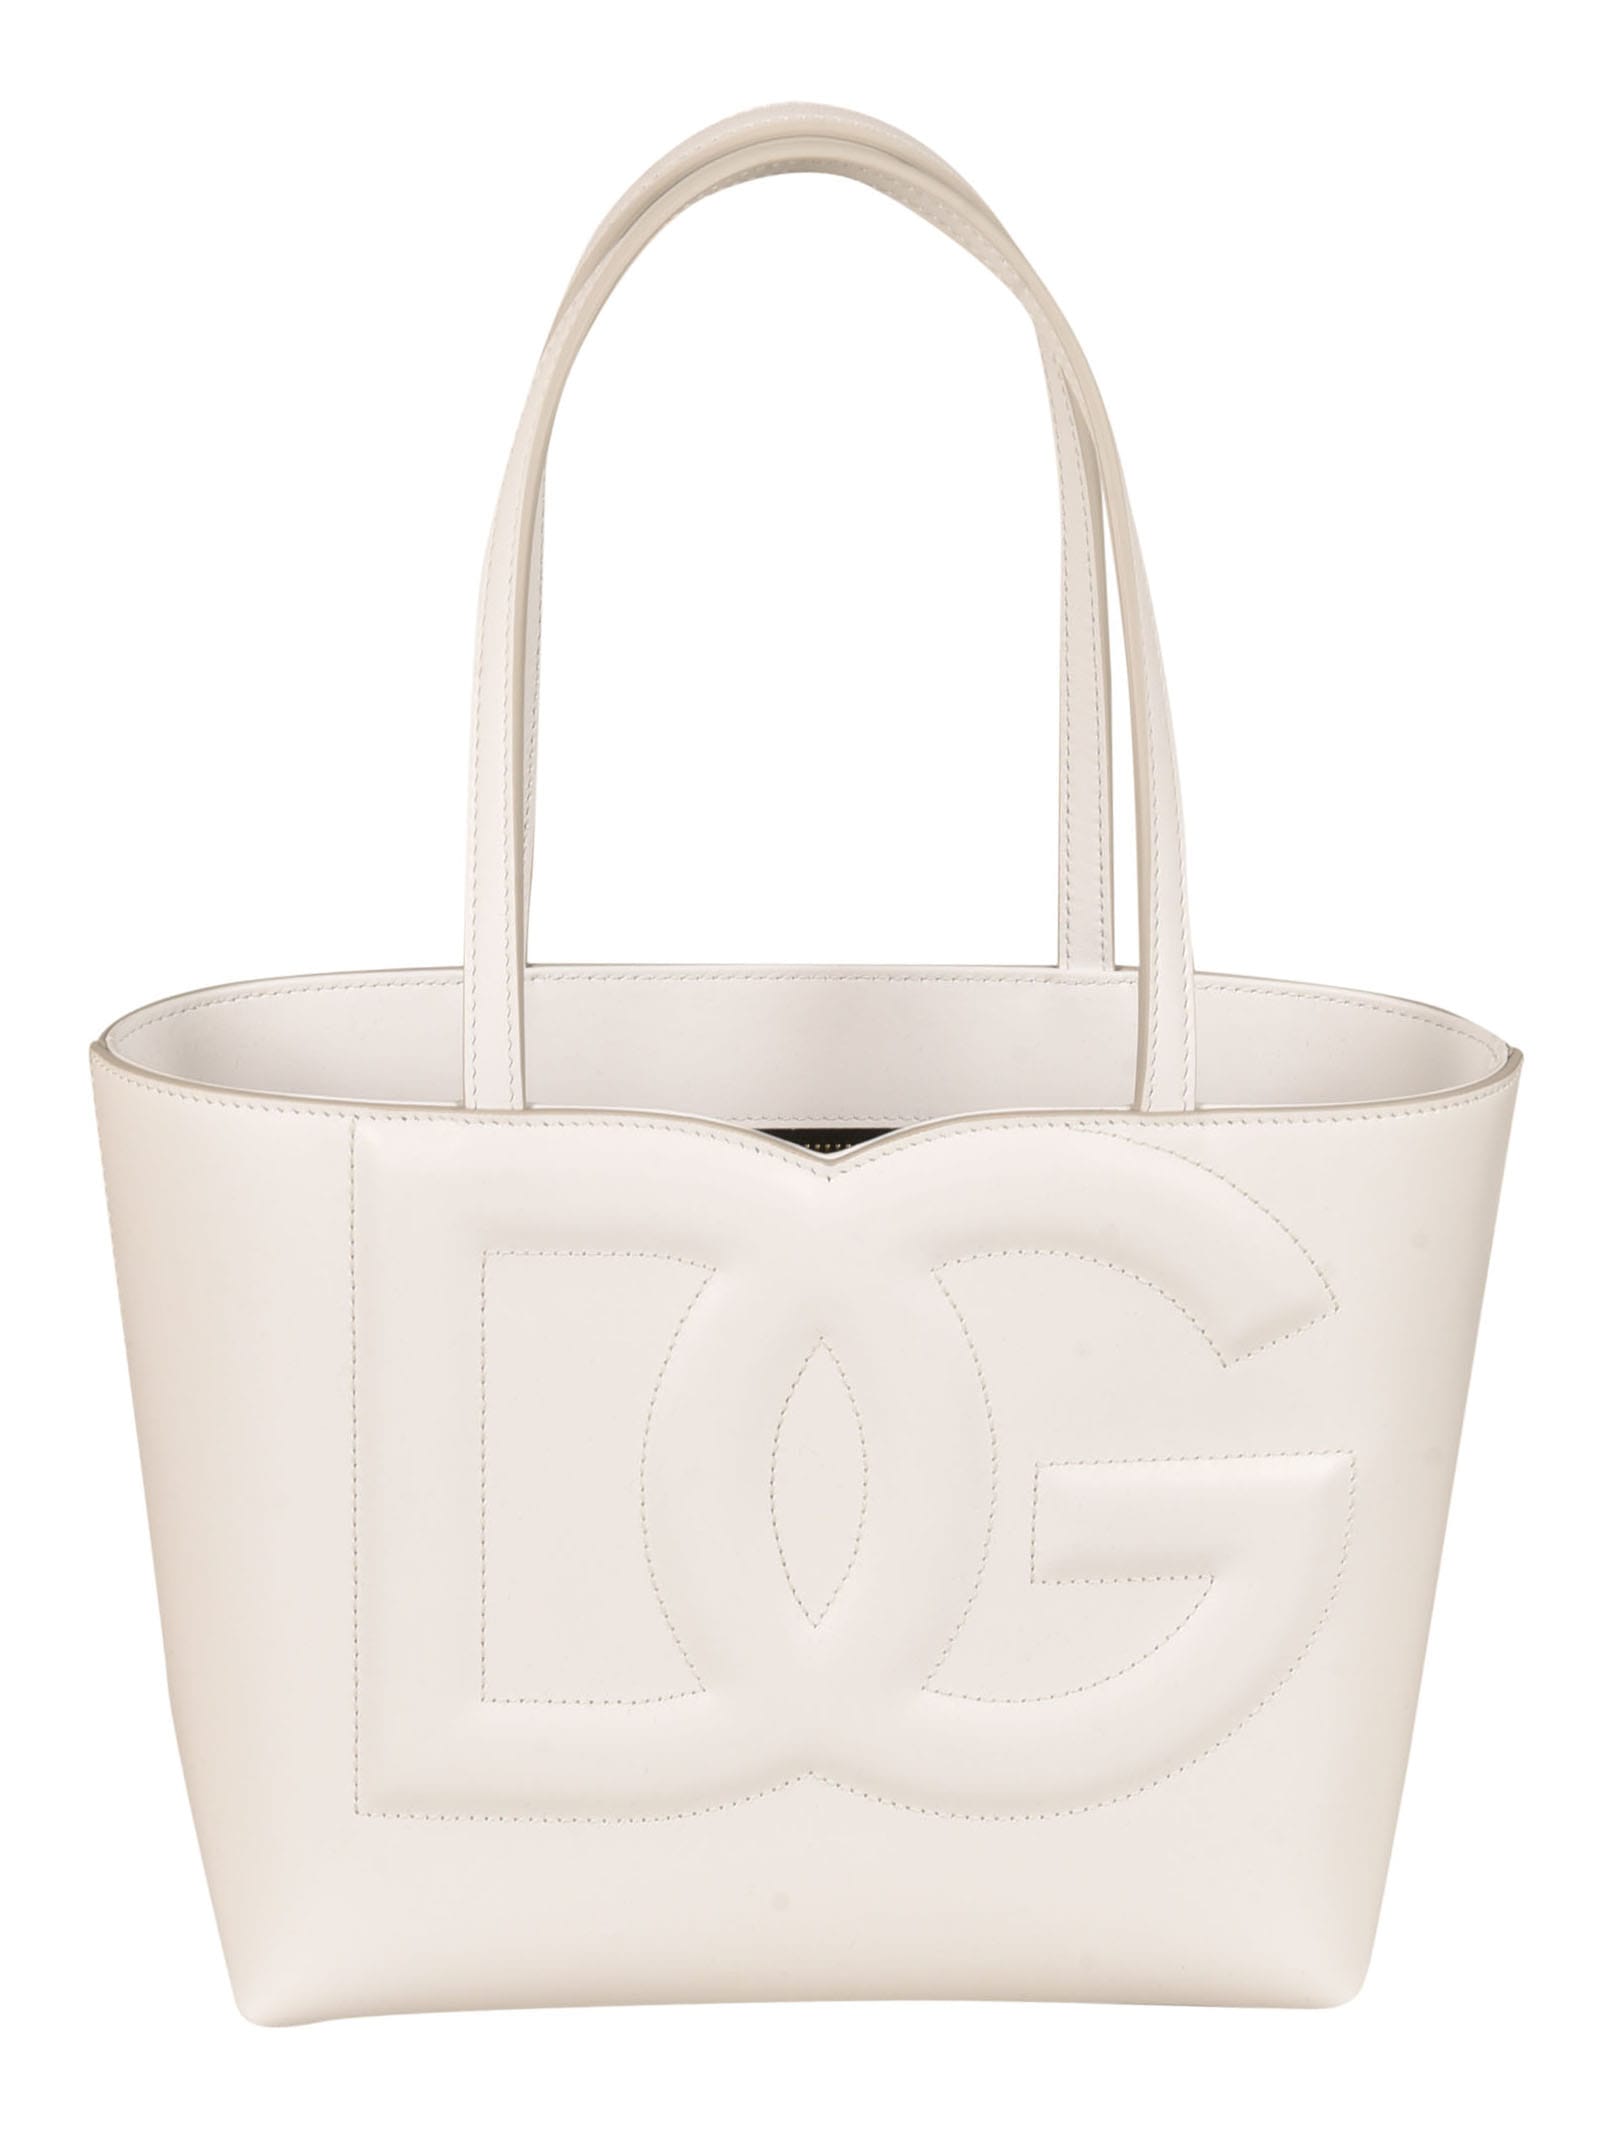 Dolce & Gabbana Embossed Logo Tote